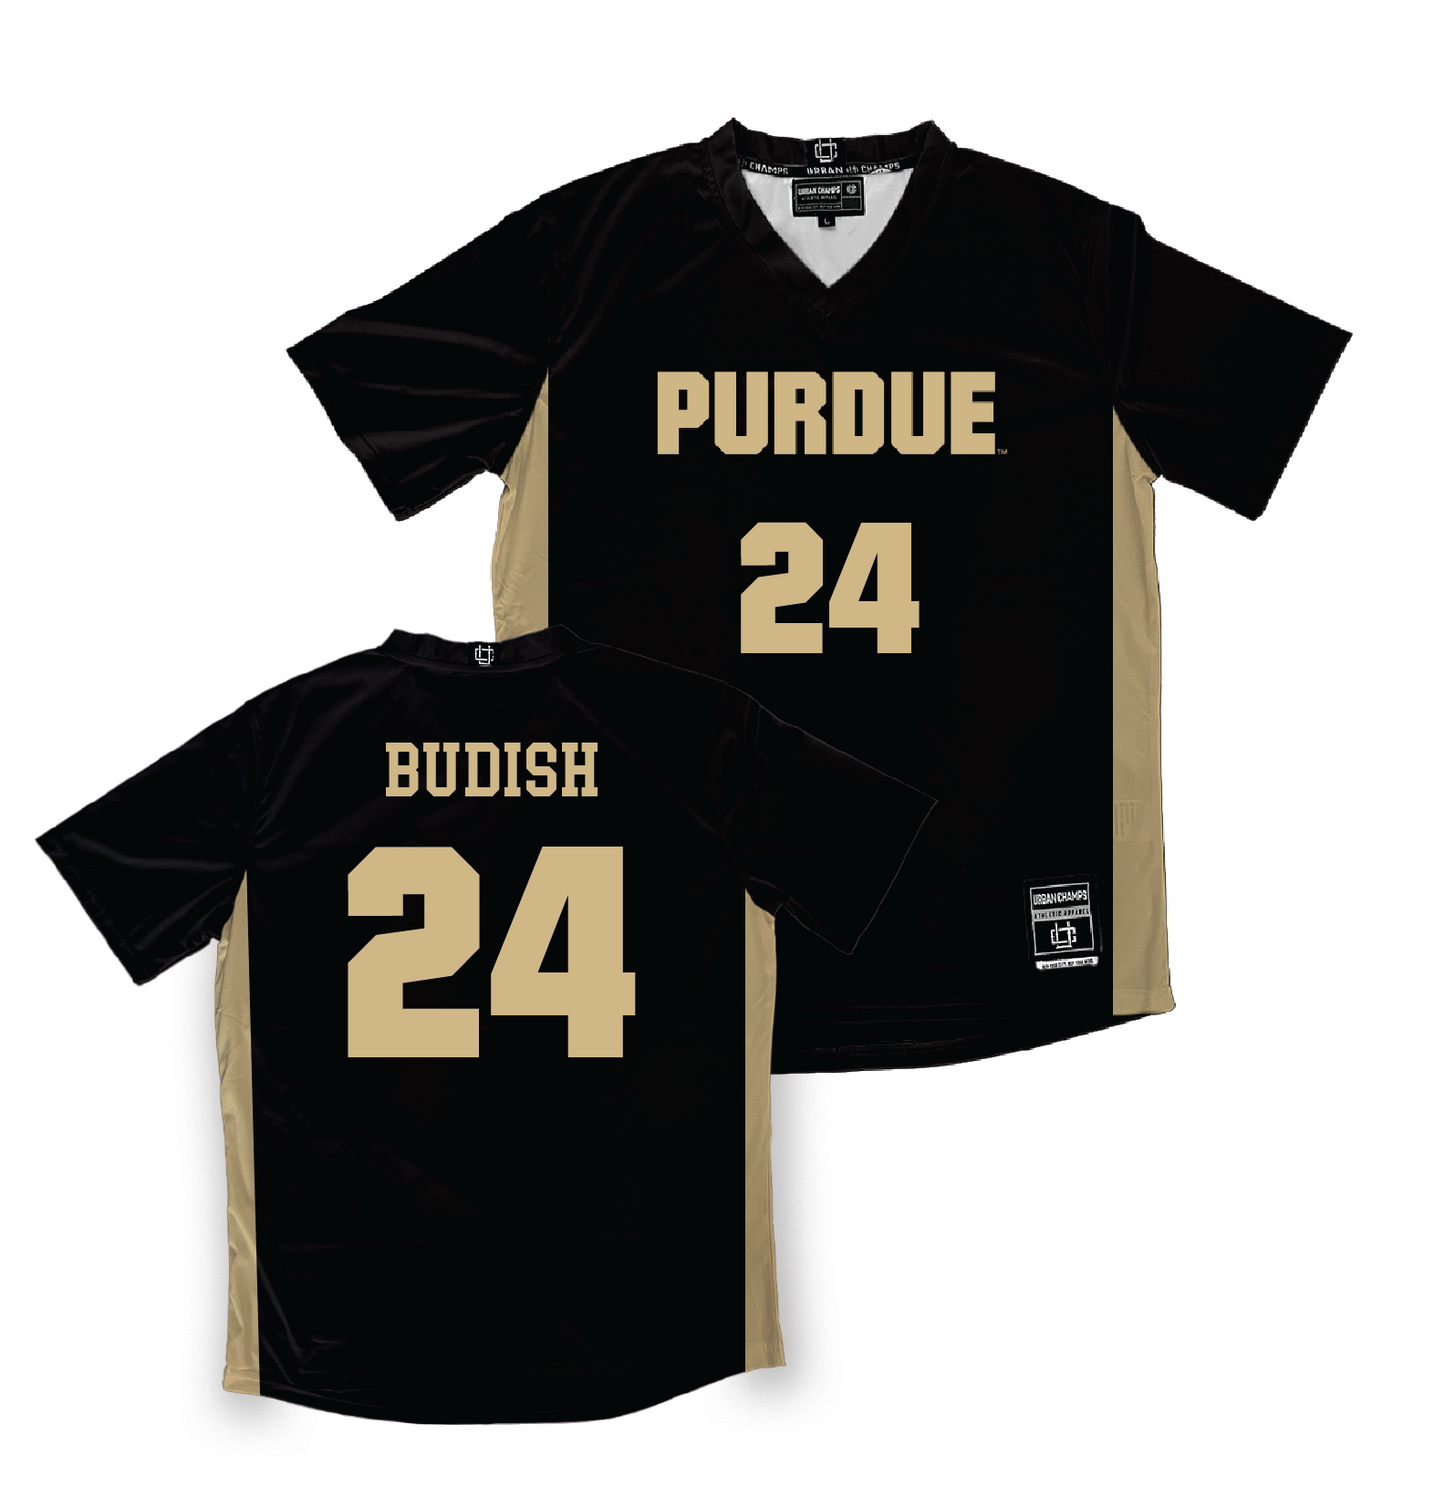 Purdue Women's Soccer Black Jersey - Kayla Budish | #24